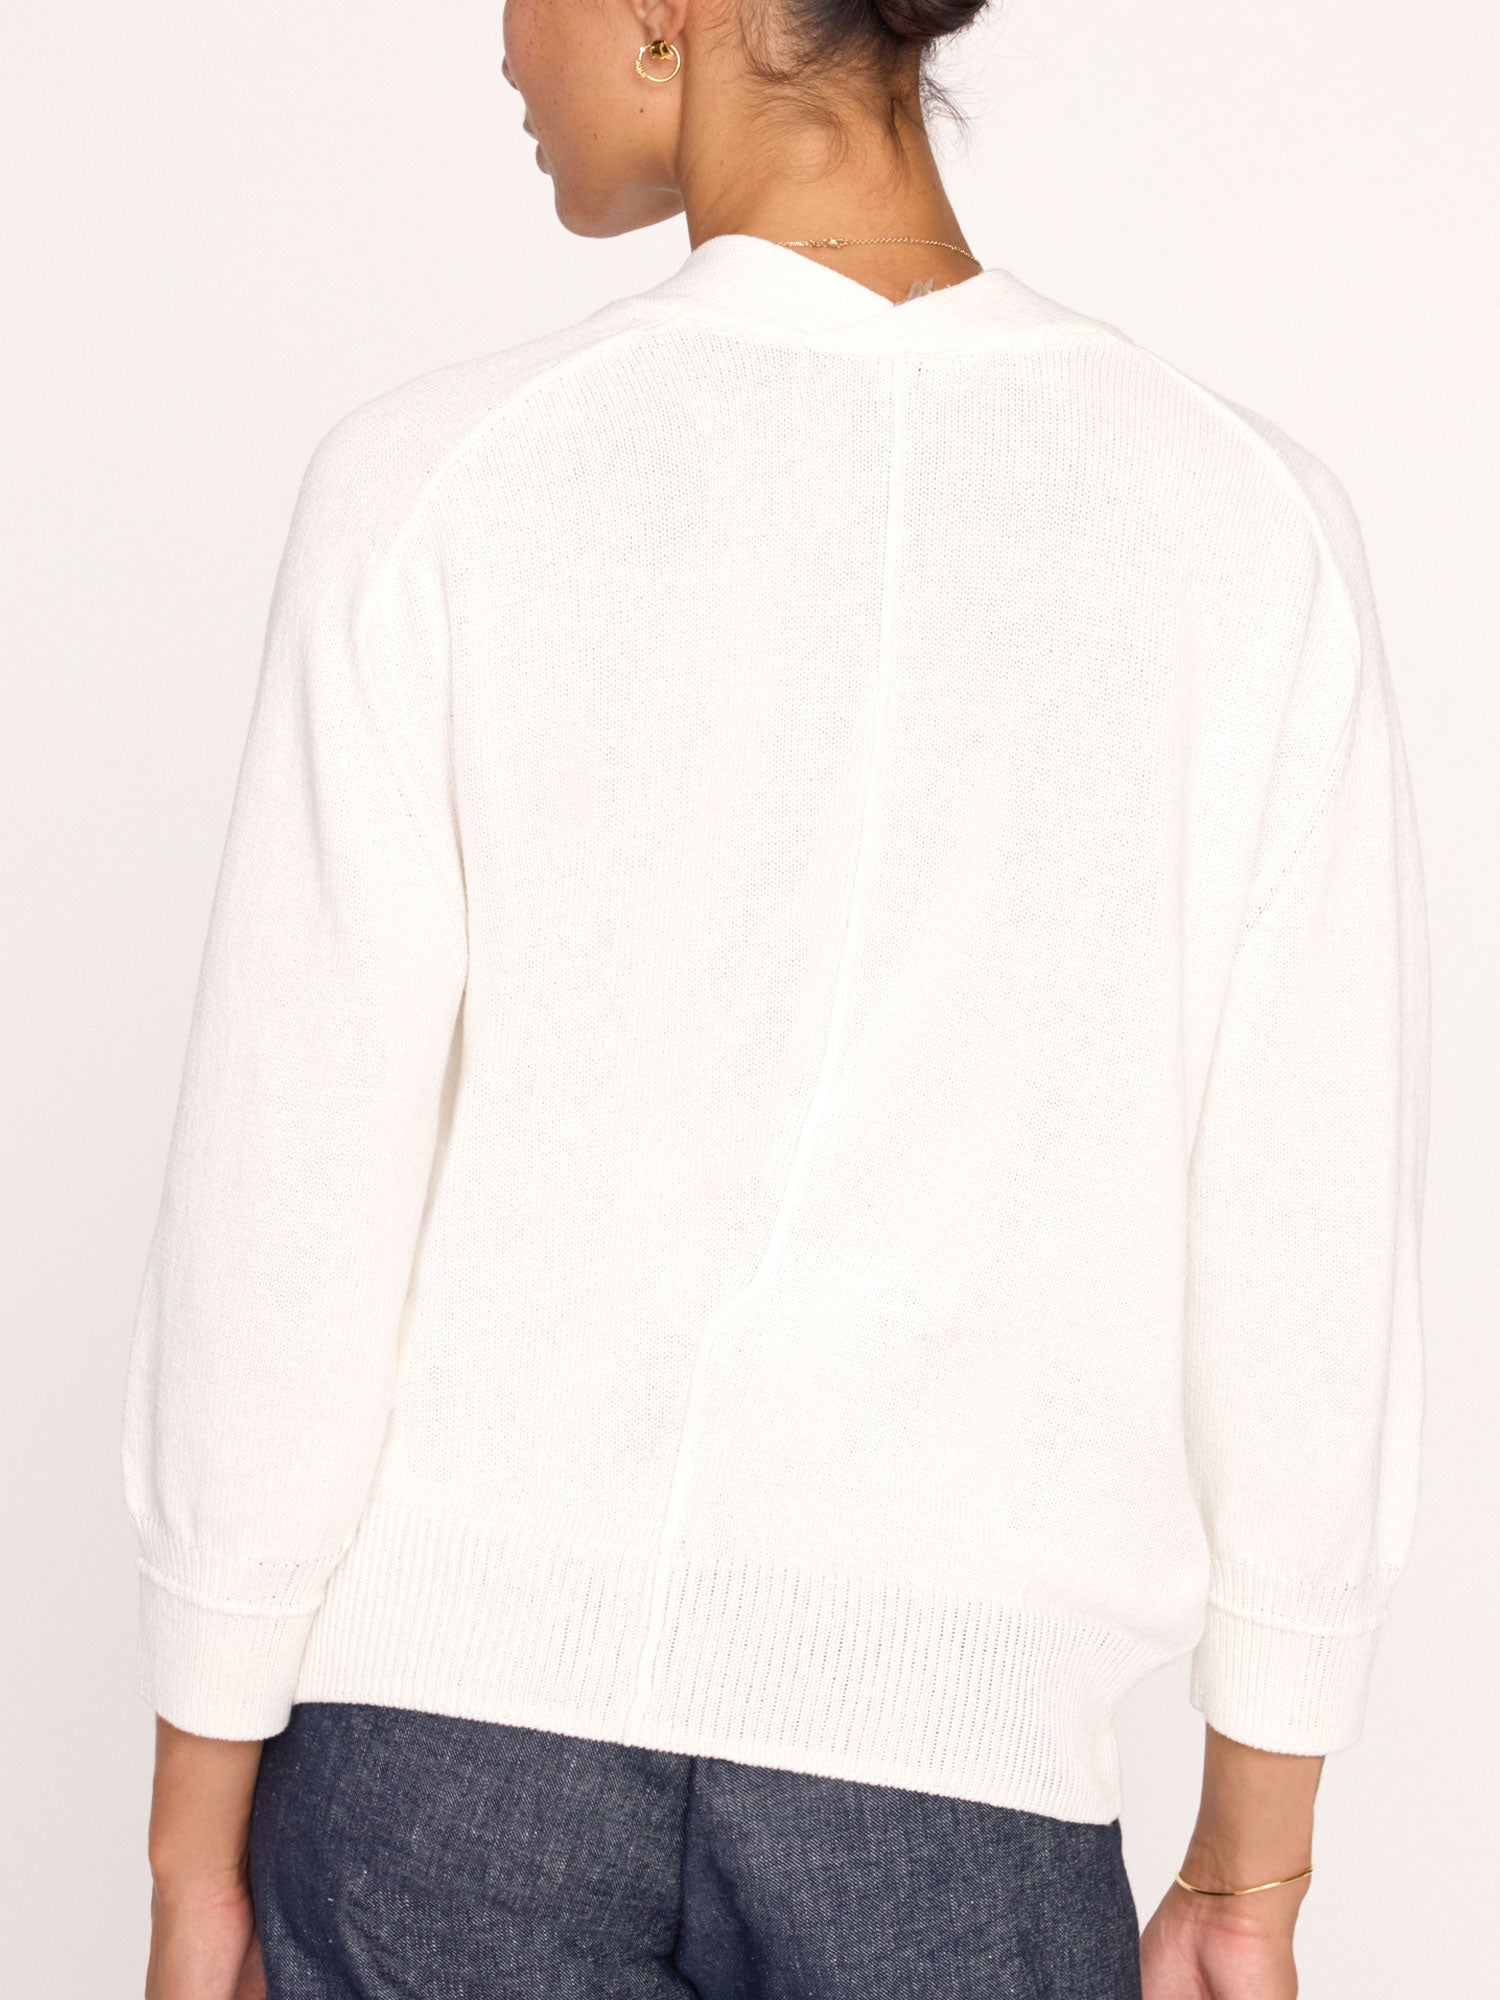 Imogen V-neck cotton white sweater back view